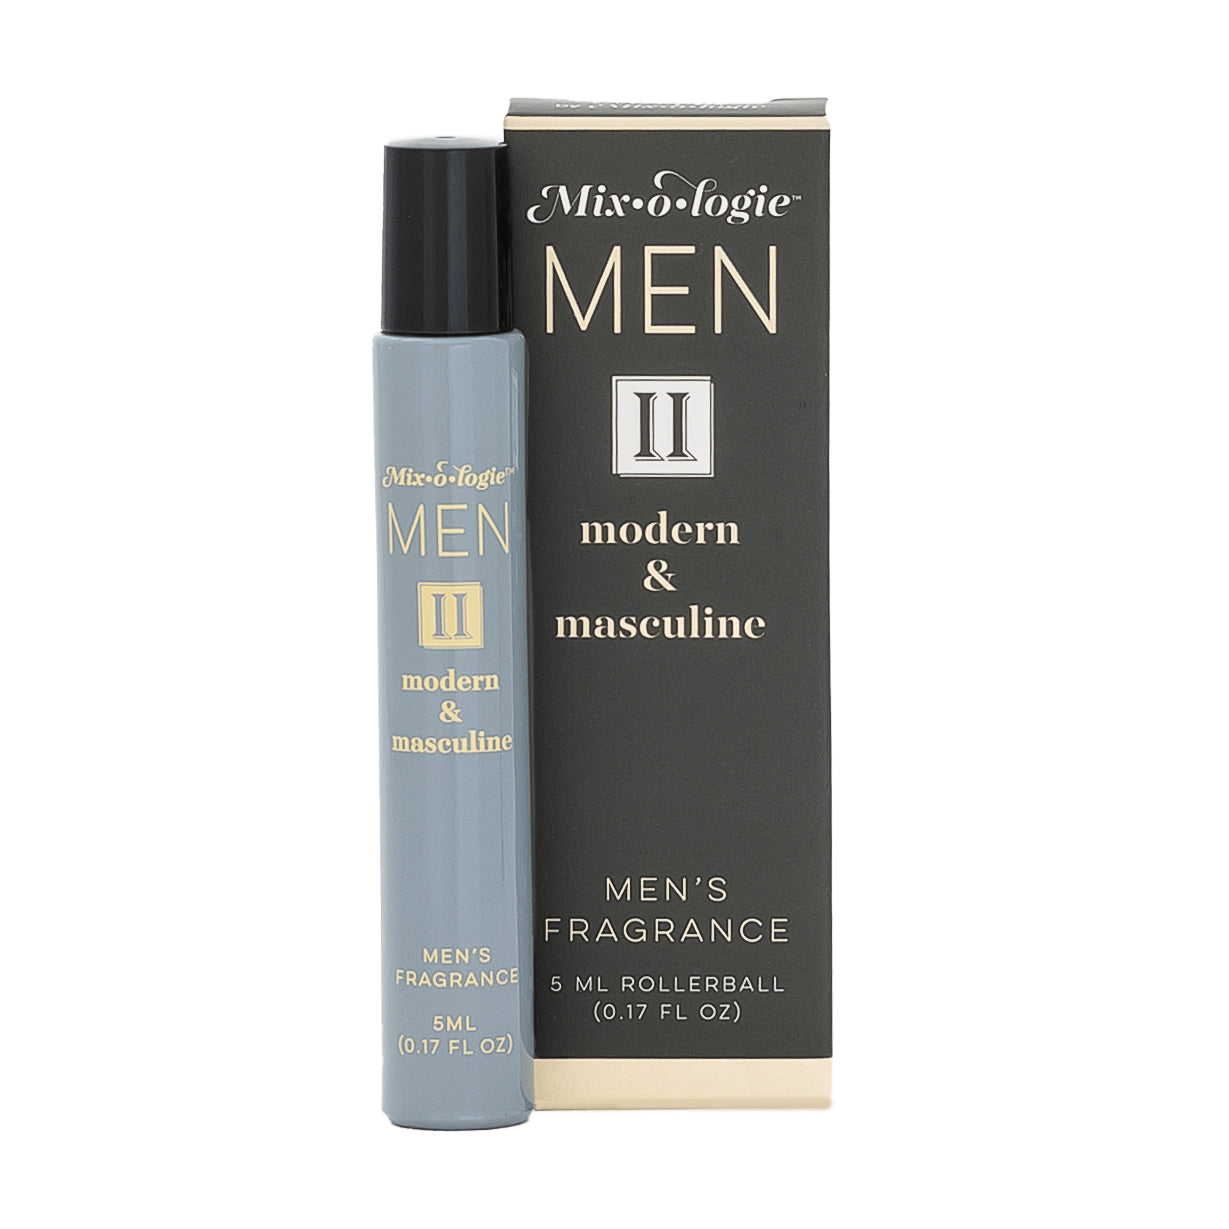 Mixologie Fragrance / Cologne for Men II (Mixologie for Men - II (Modern & Masculine)